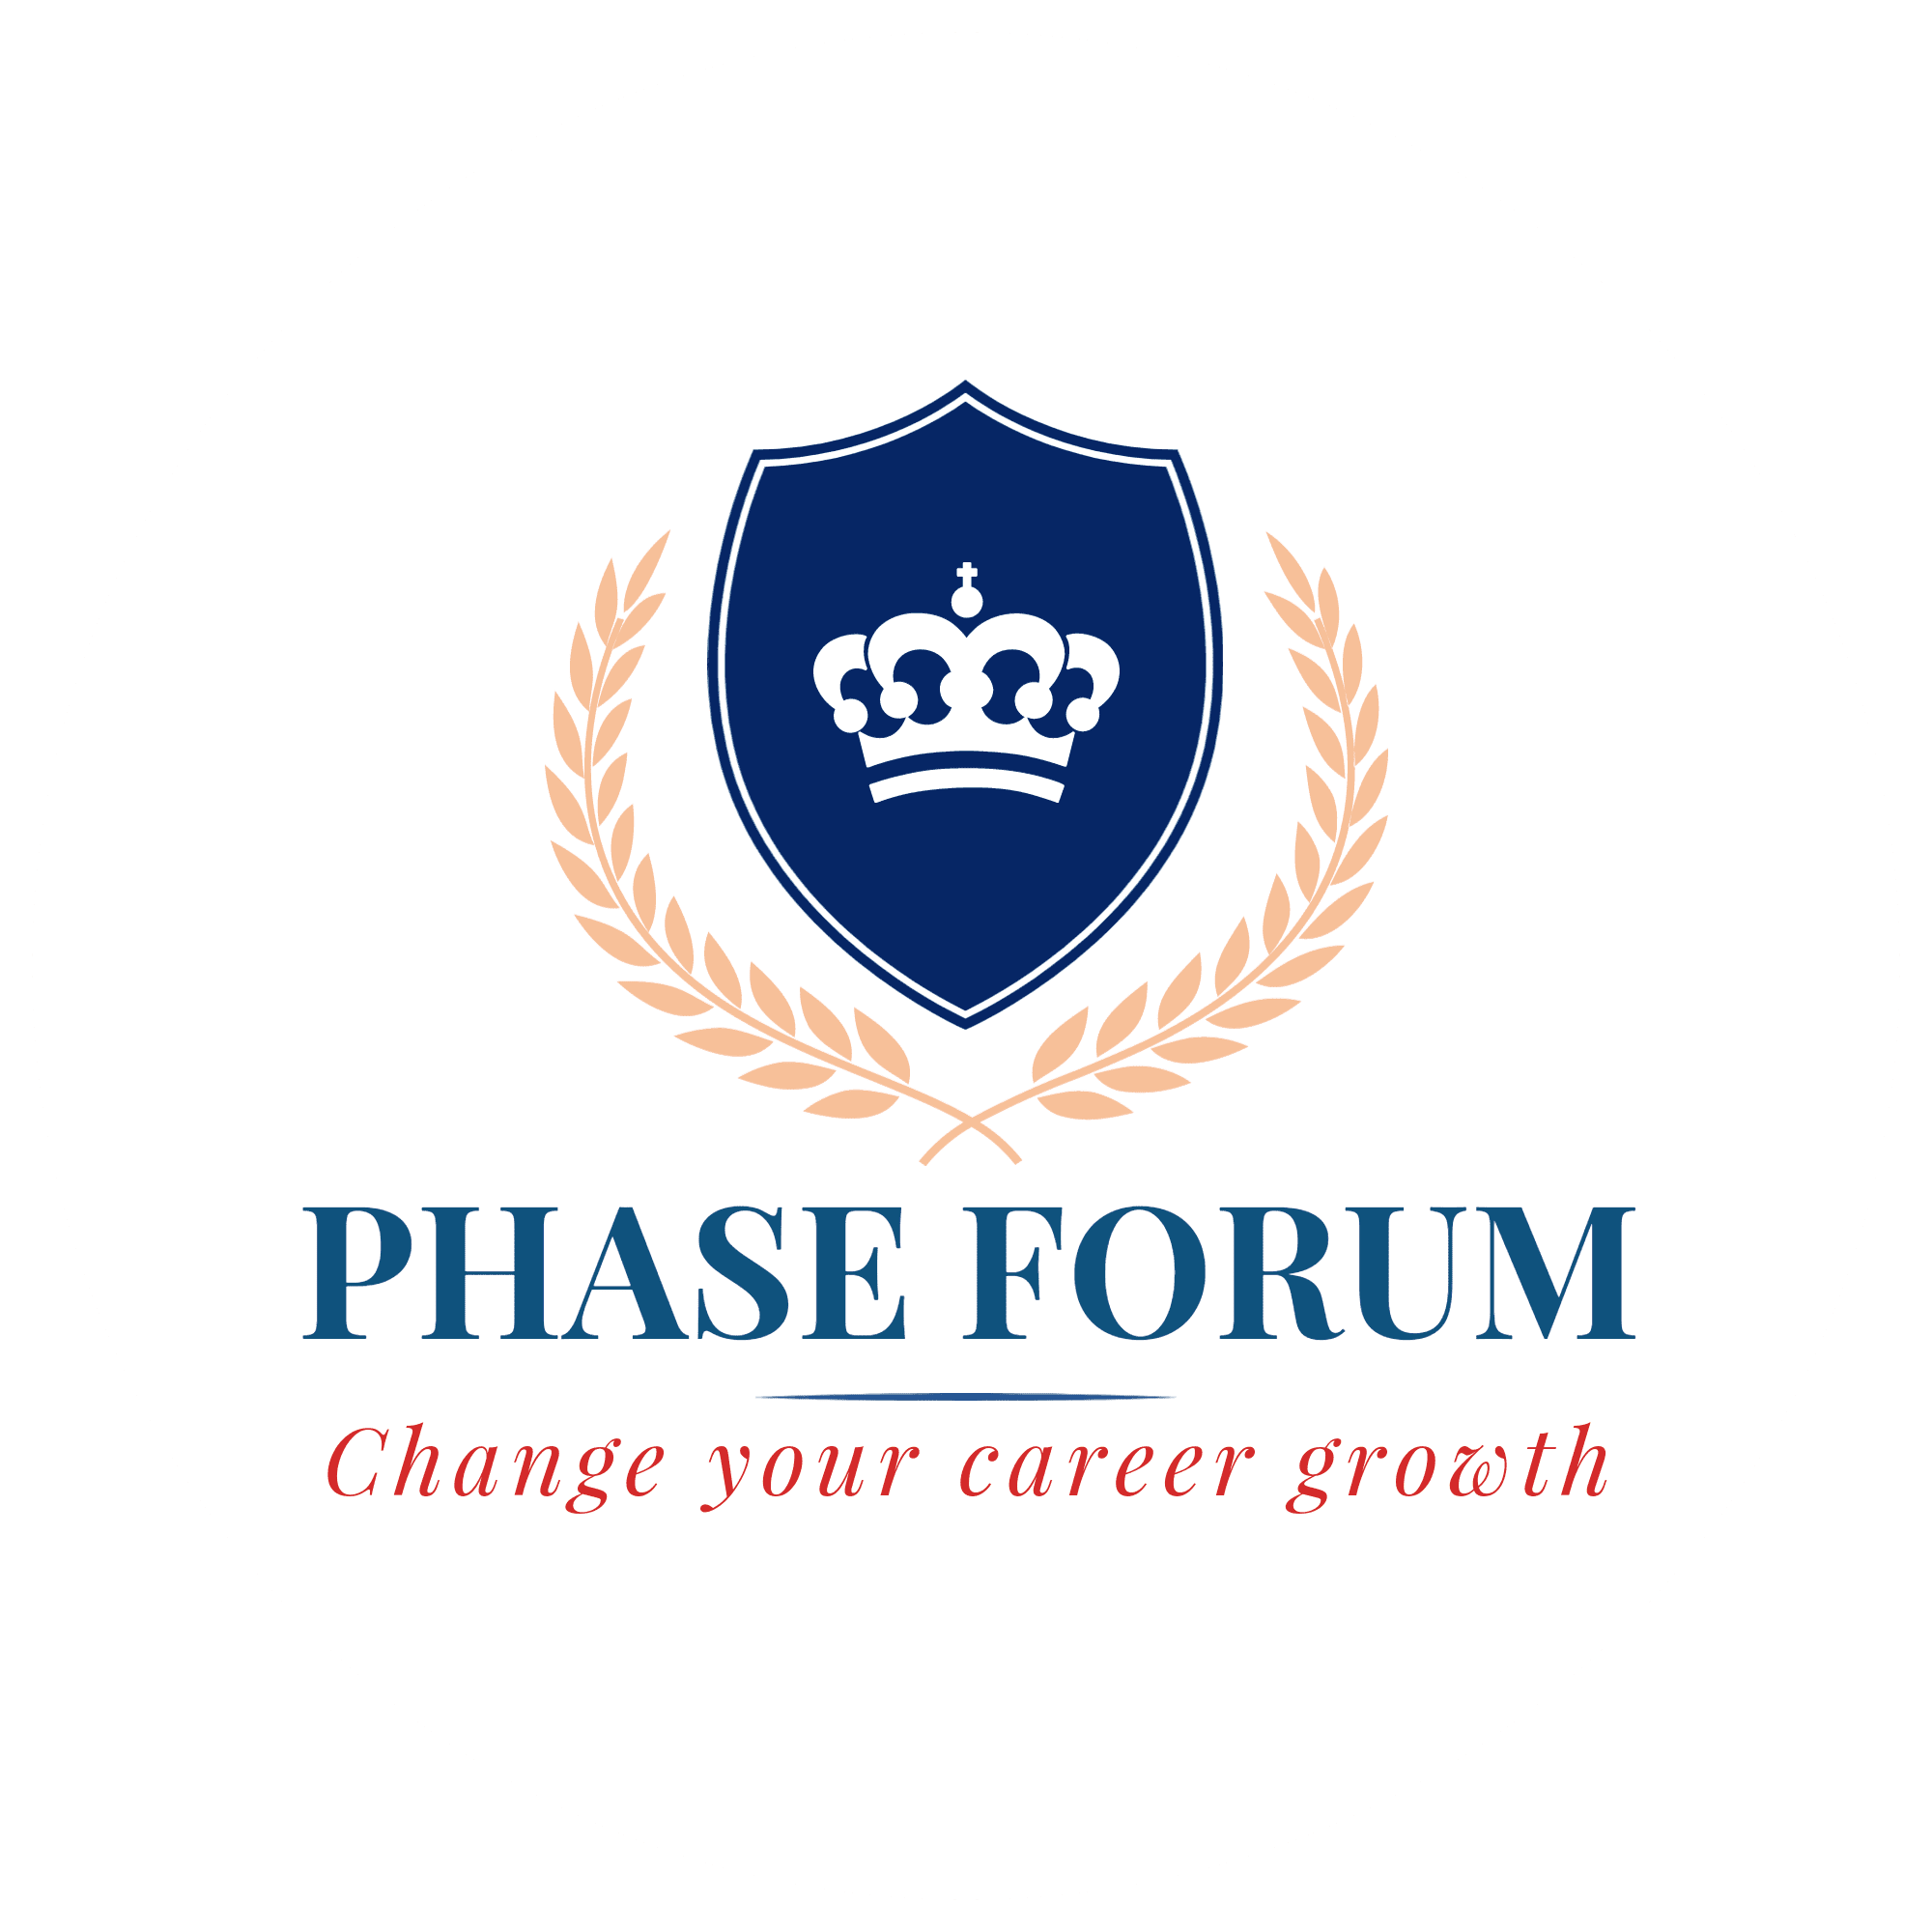 Phase Forum